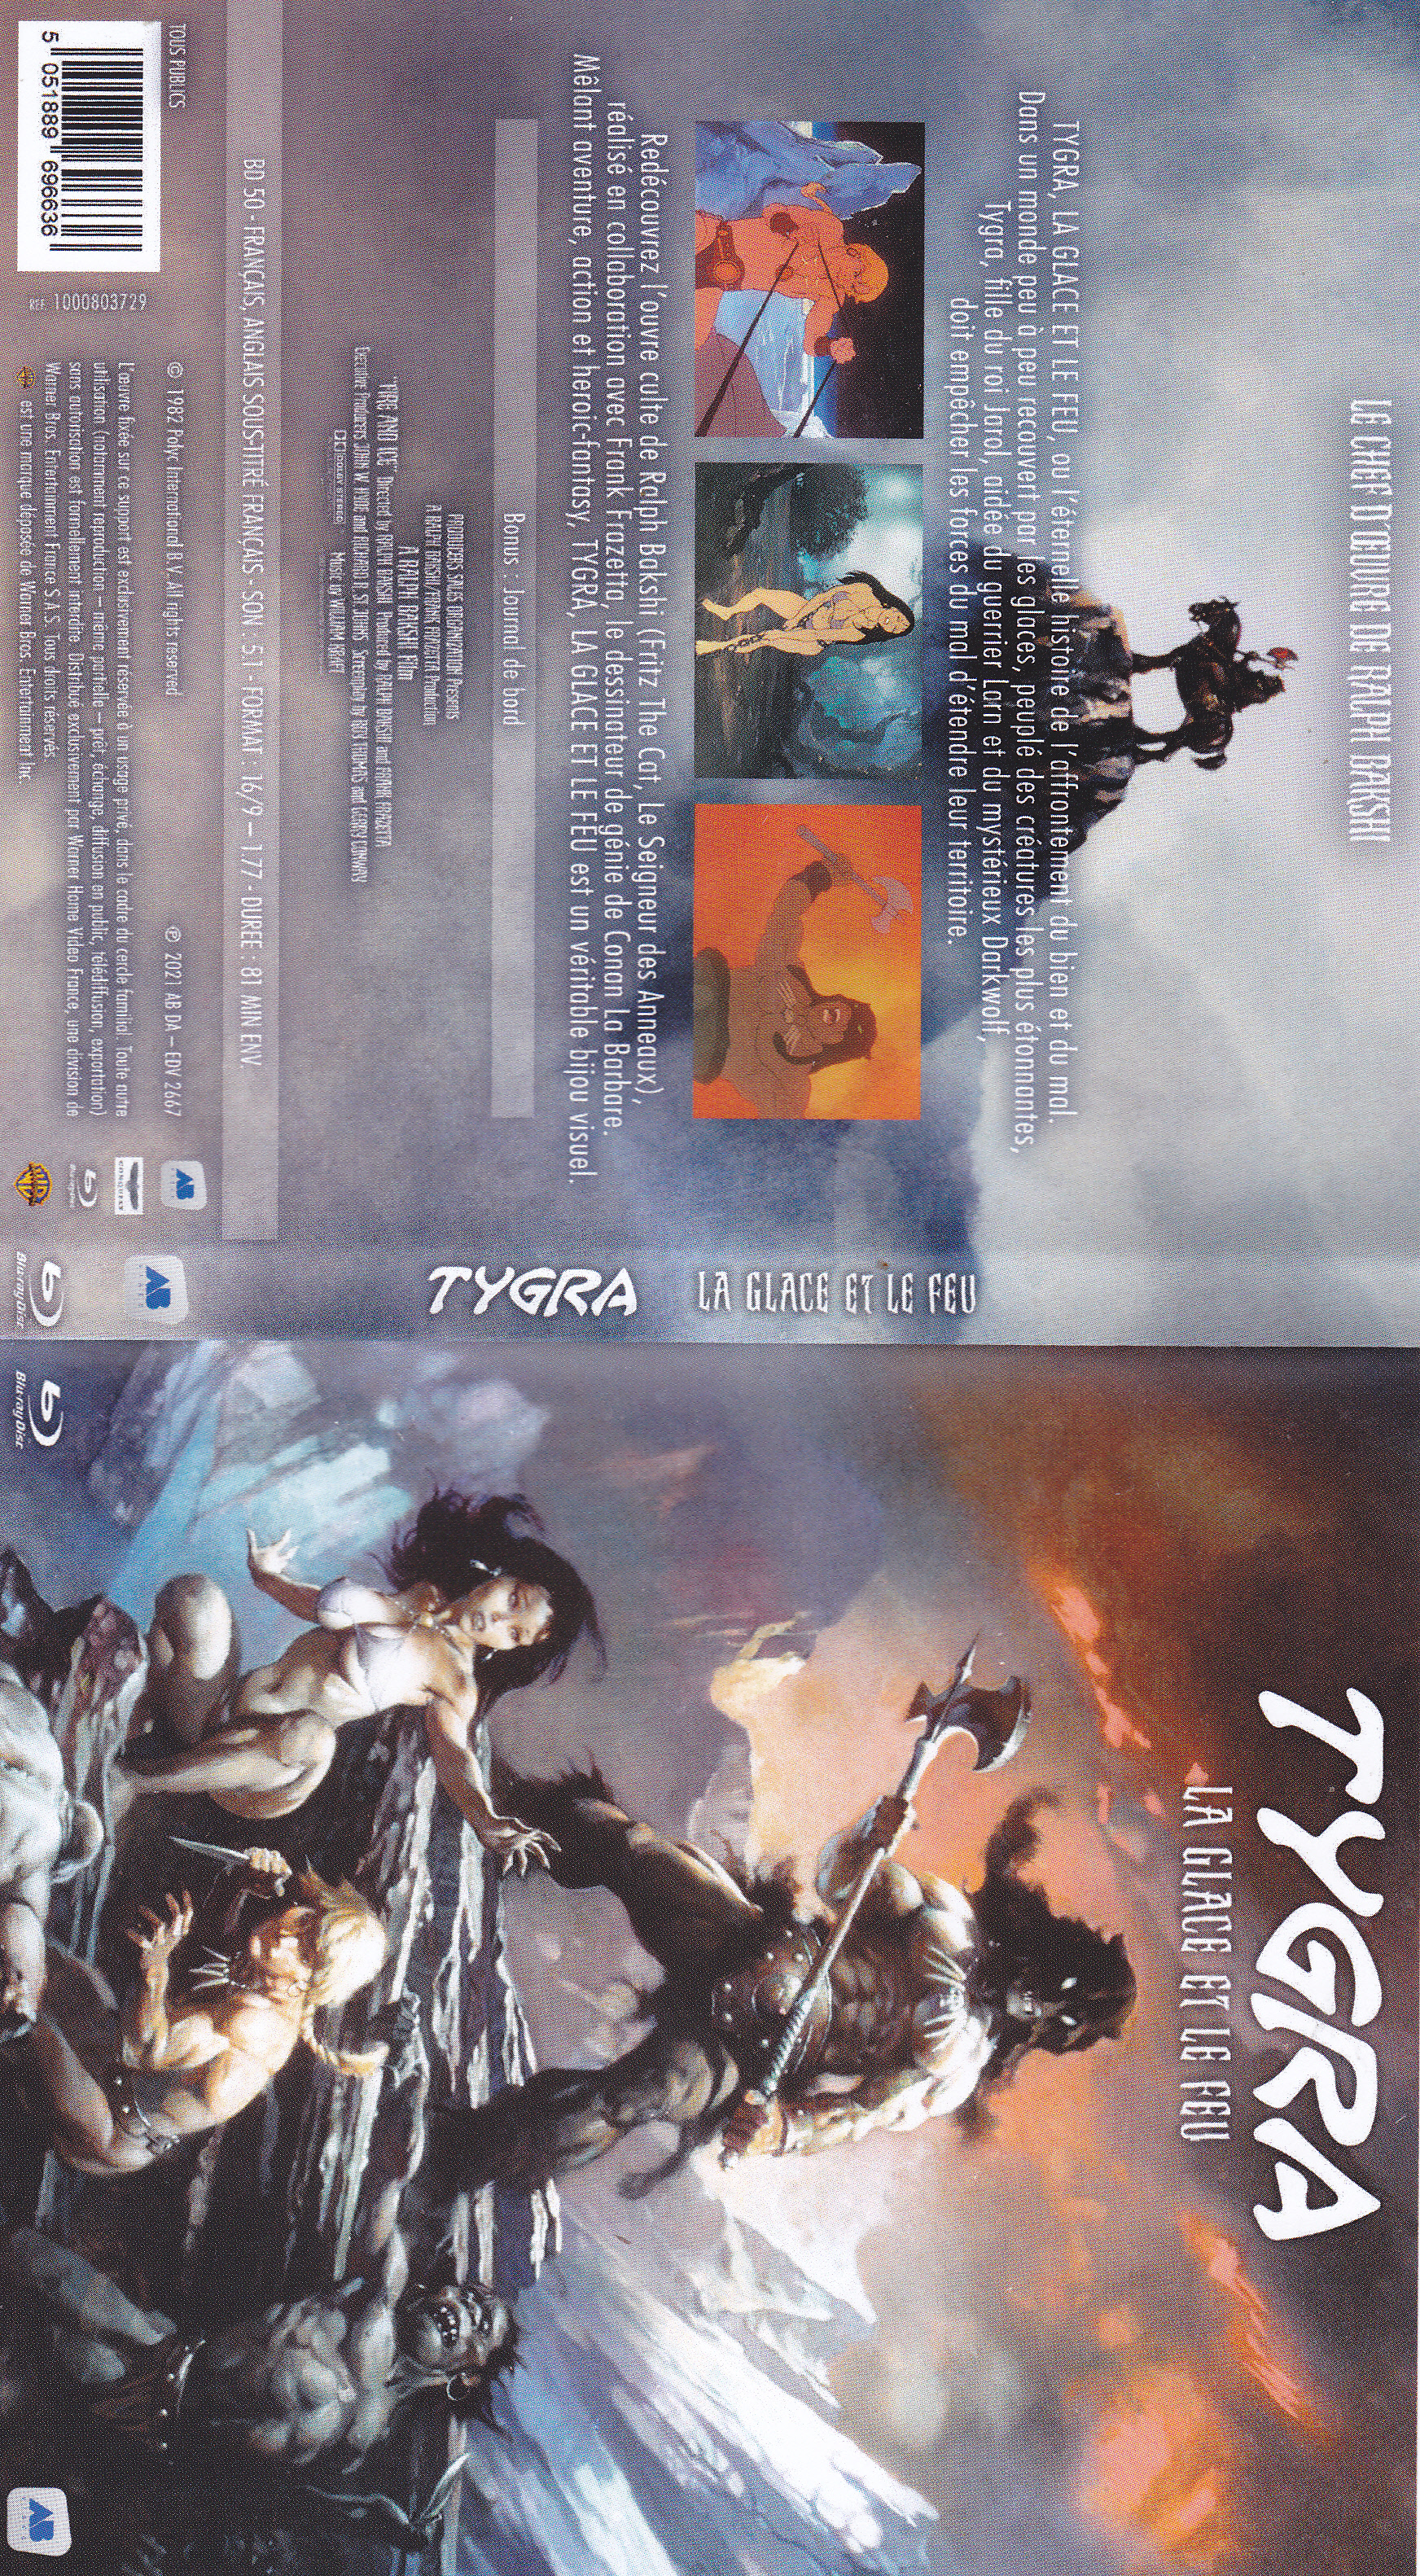 Jaquette DVD Tygra la glace et le feu (BLU-RAY)